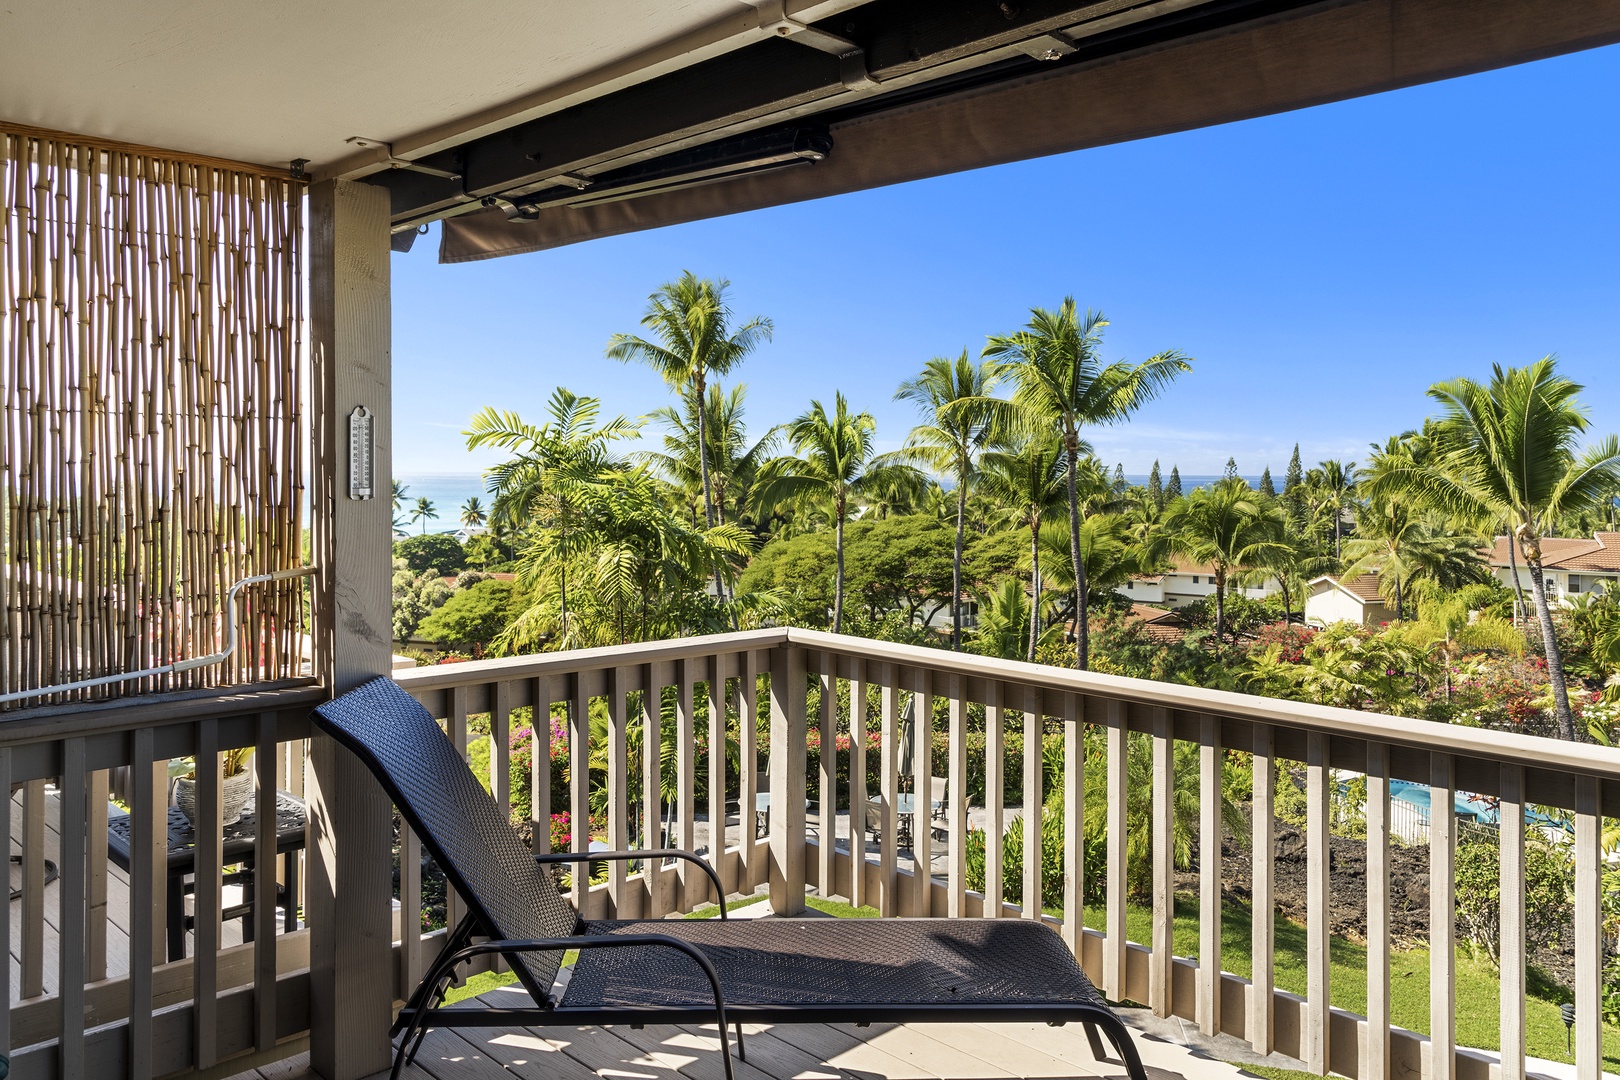 Kailua Kona Vacation Rentals, Keauhou Resort 125 - Lounge on the Private Lanai!